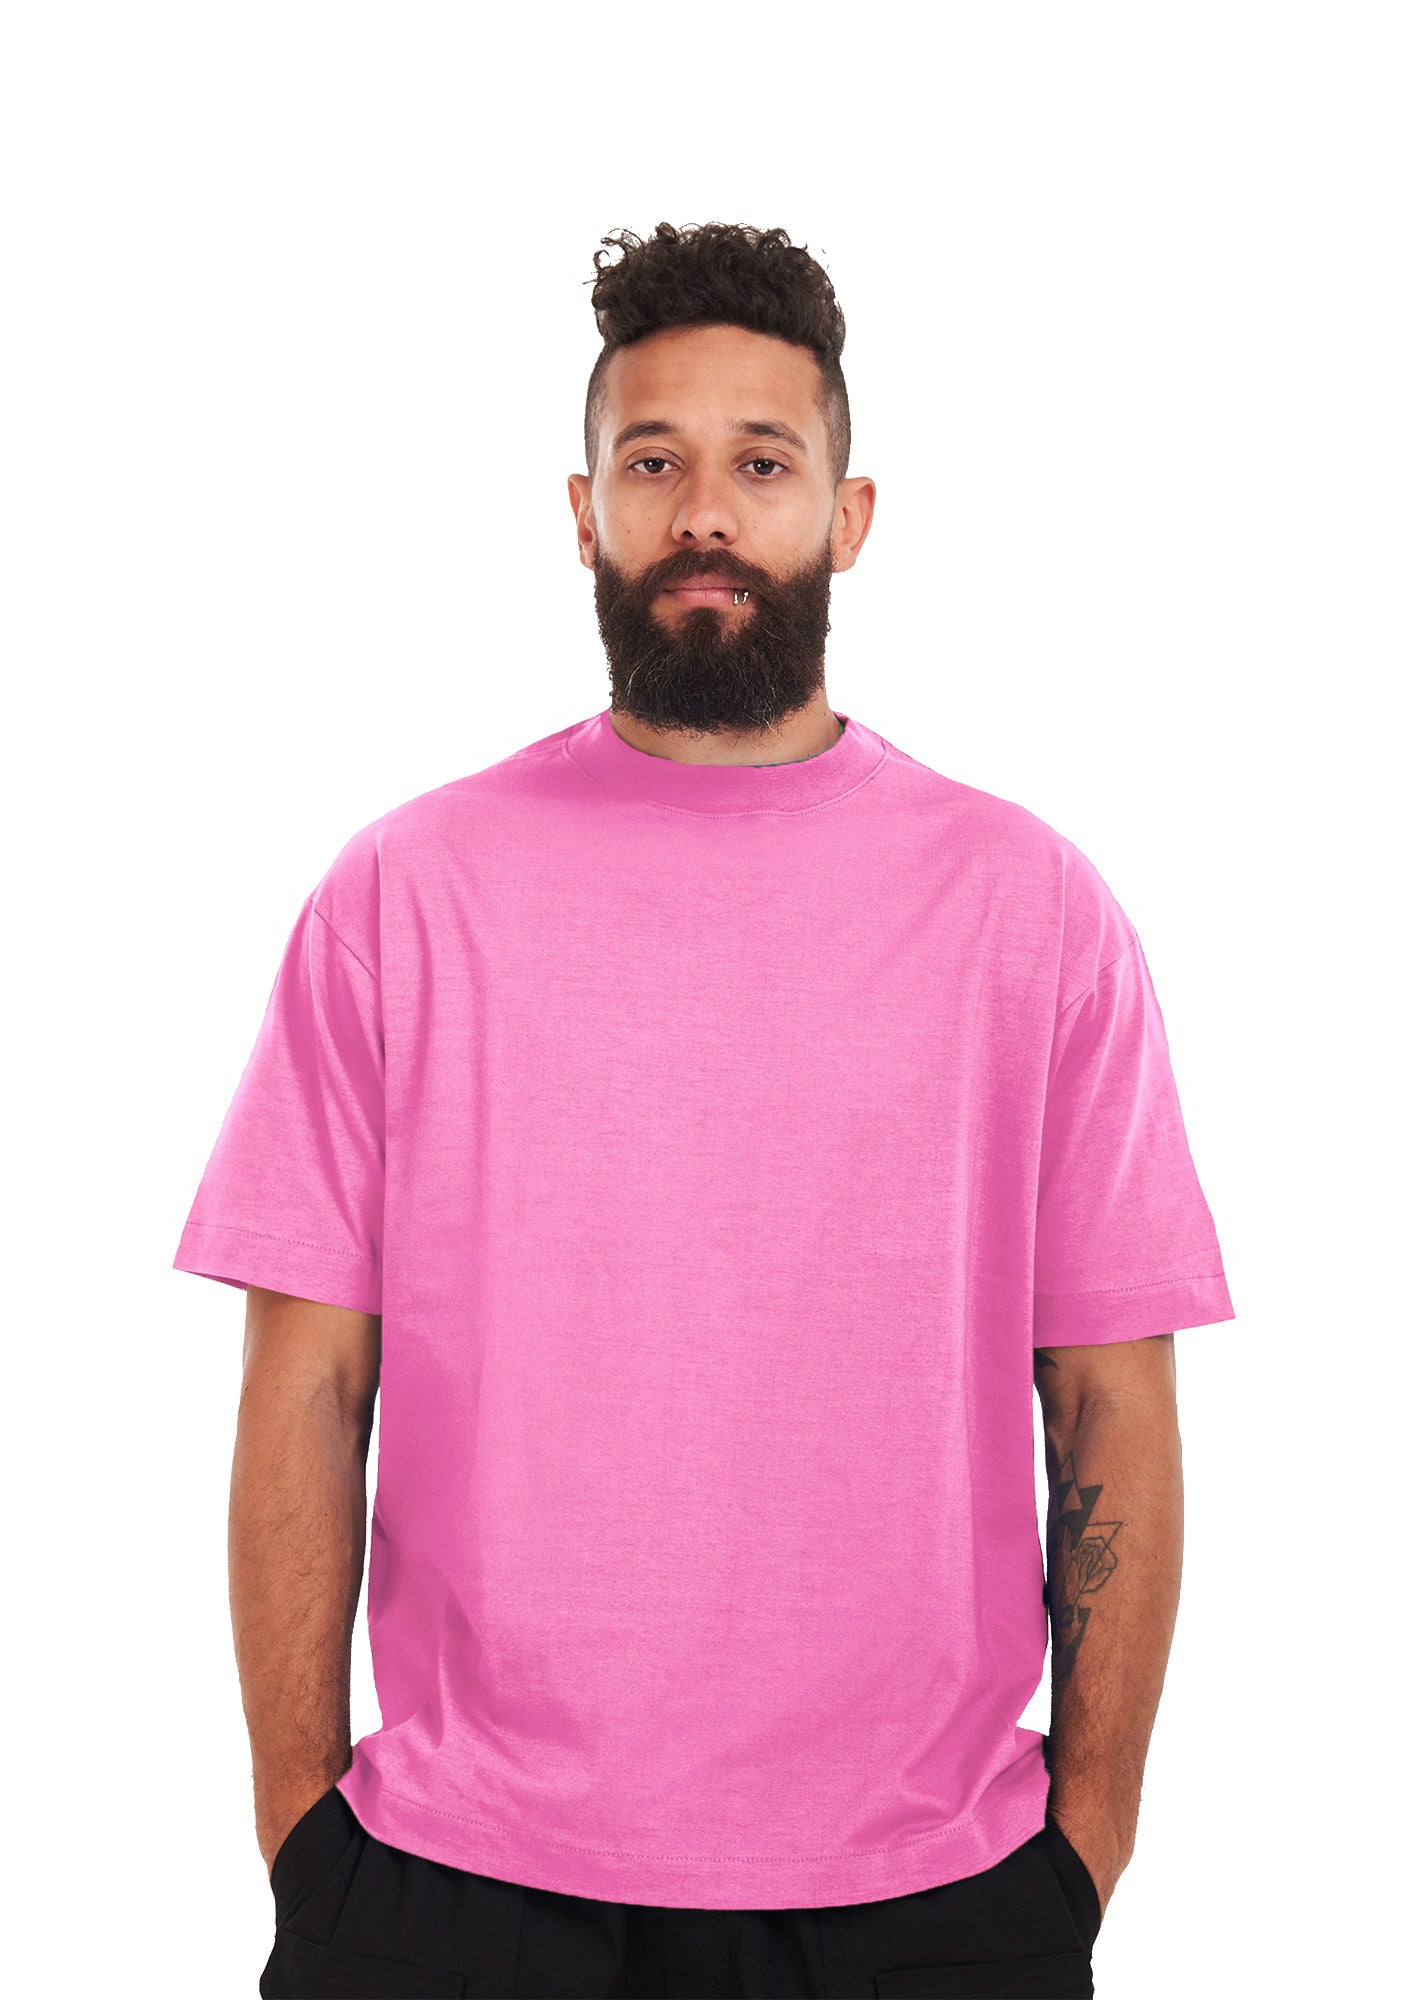 Oversized plain Pink T-shirt .